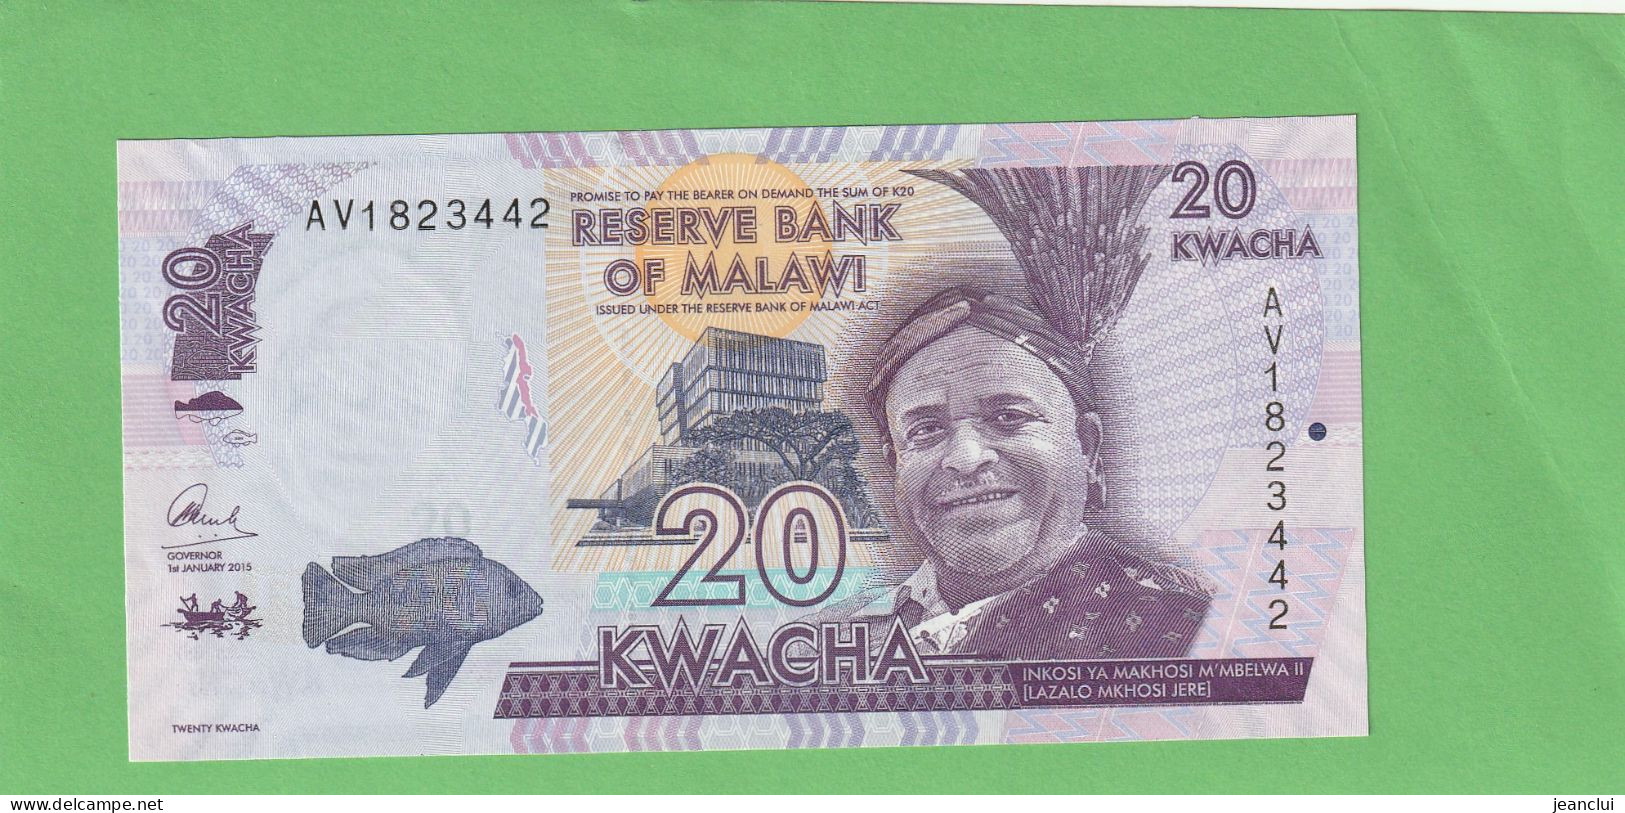 RESERVE BANK OF MALAWI  .  20 KWACHA  .  1-1-2015   .  N°  AV 1823442   .  2 SCANNES  .  ETAT LUXE  .  UNC - Malawi